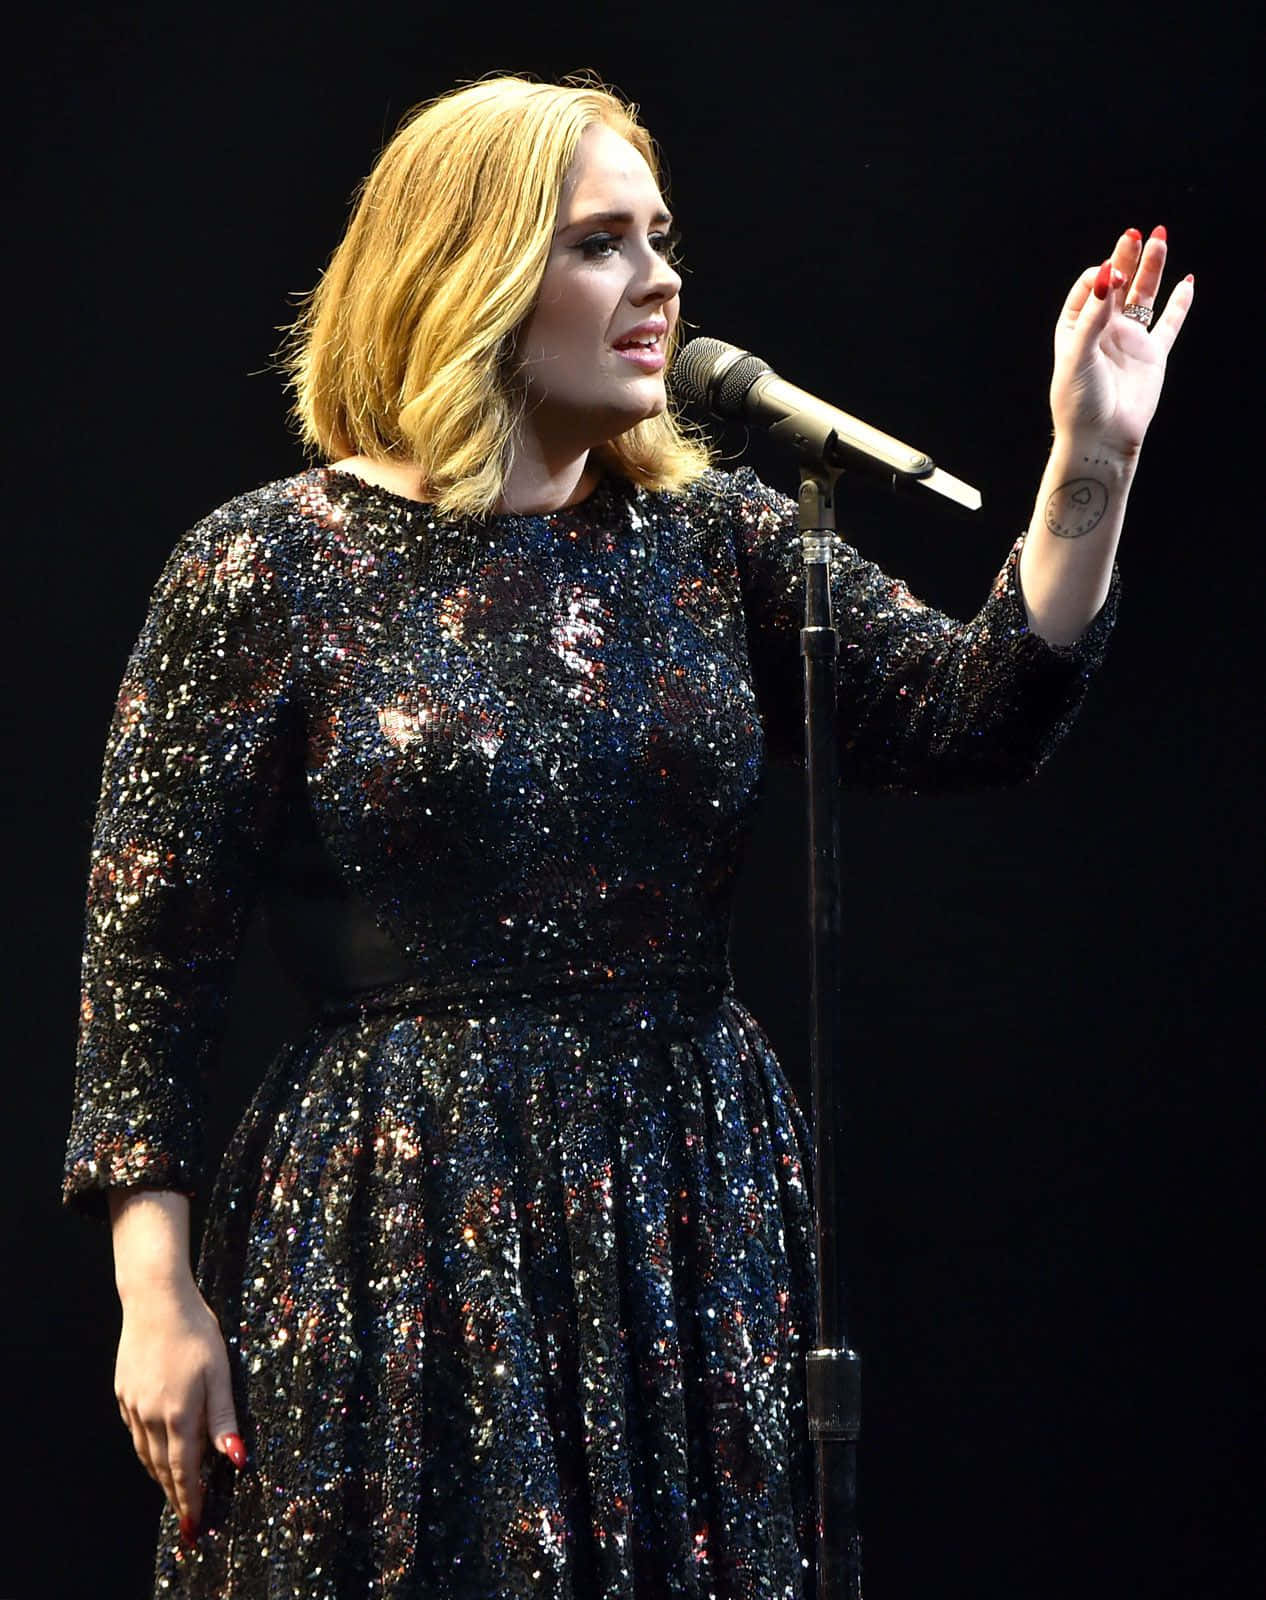 Adele is an English singer-songwriter and multi-Grammy Award winner